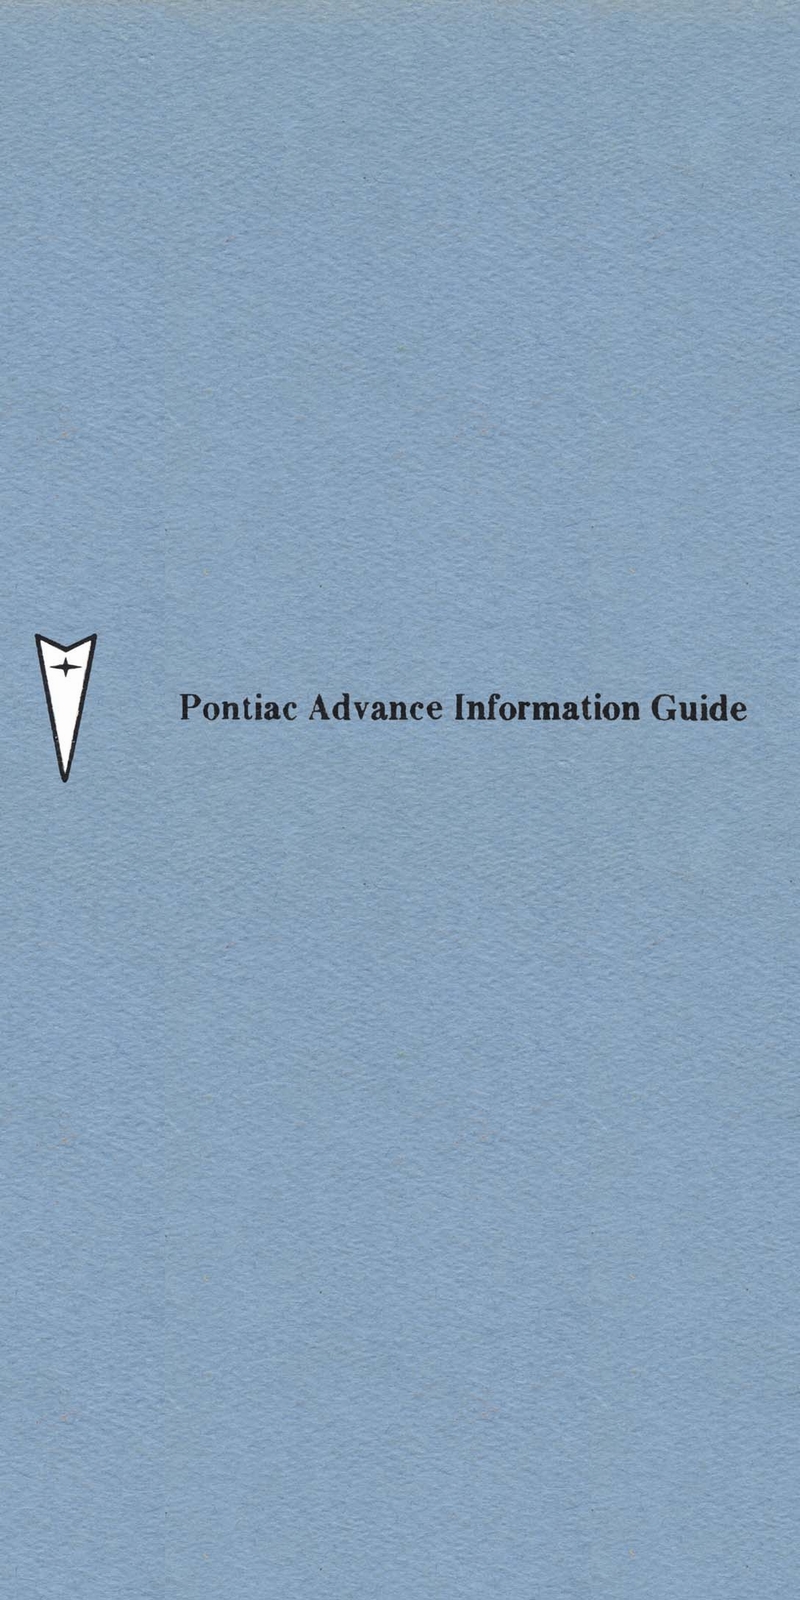 n_1967 Pontiac Advance Information Guide-00.jpg